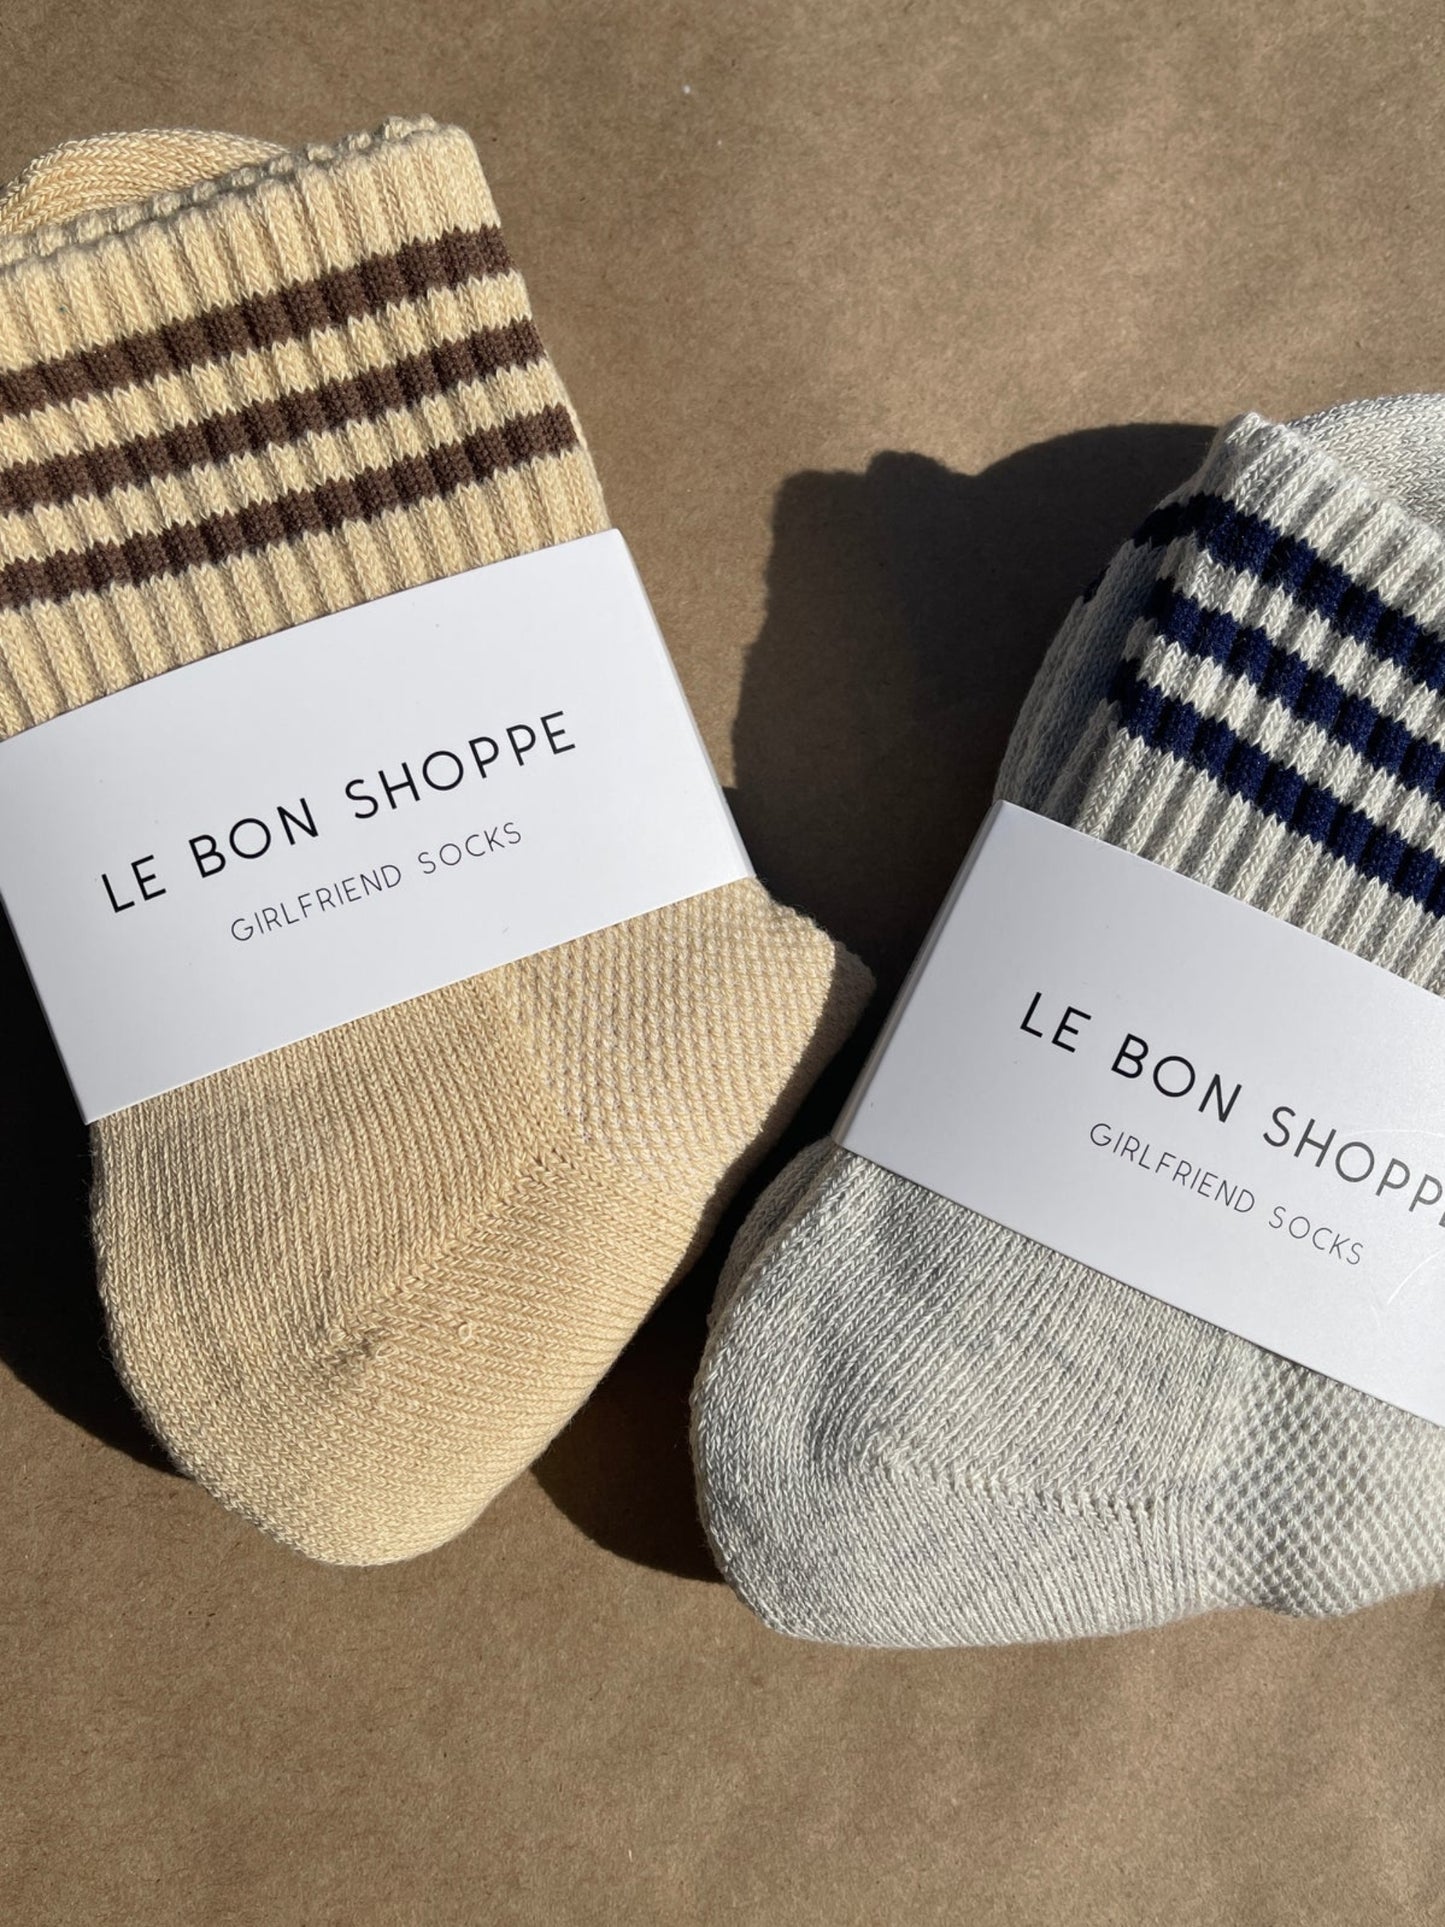 Le Bon Shoppe Girlfriend Socks / Daisy